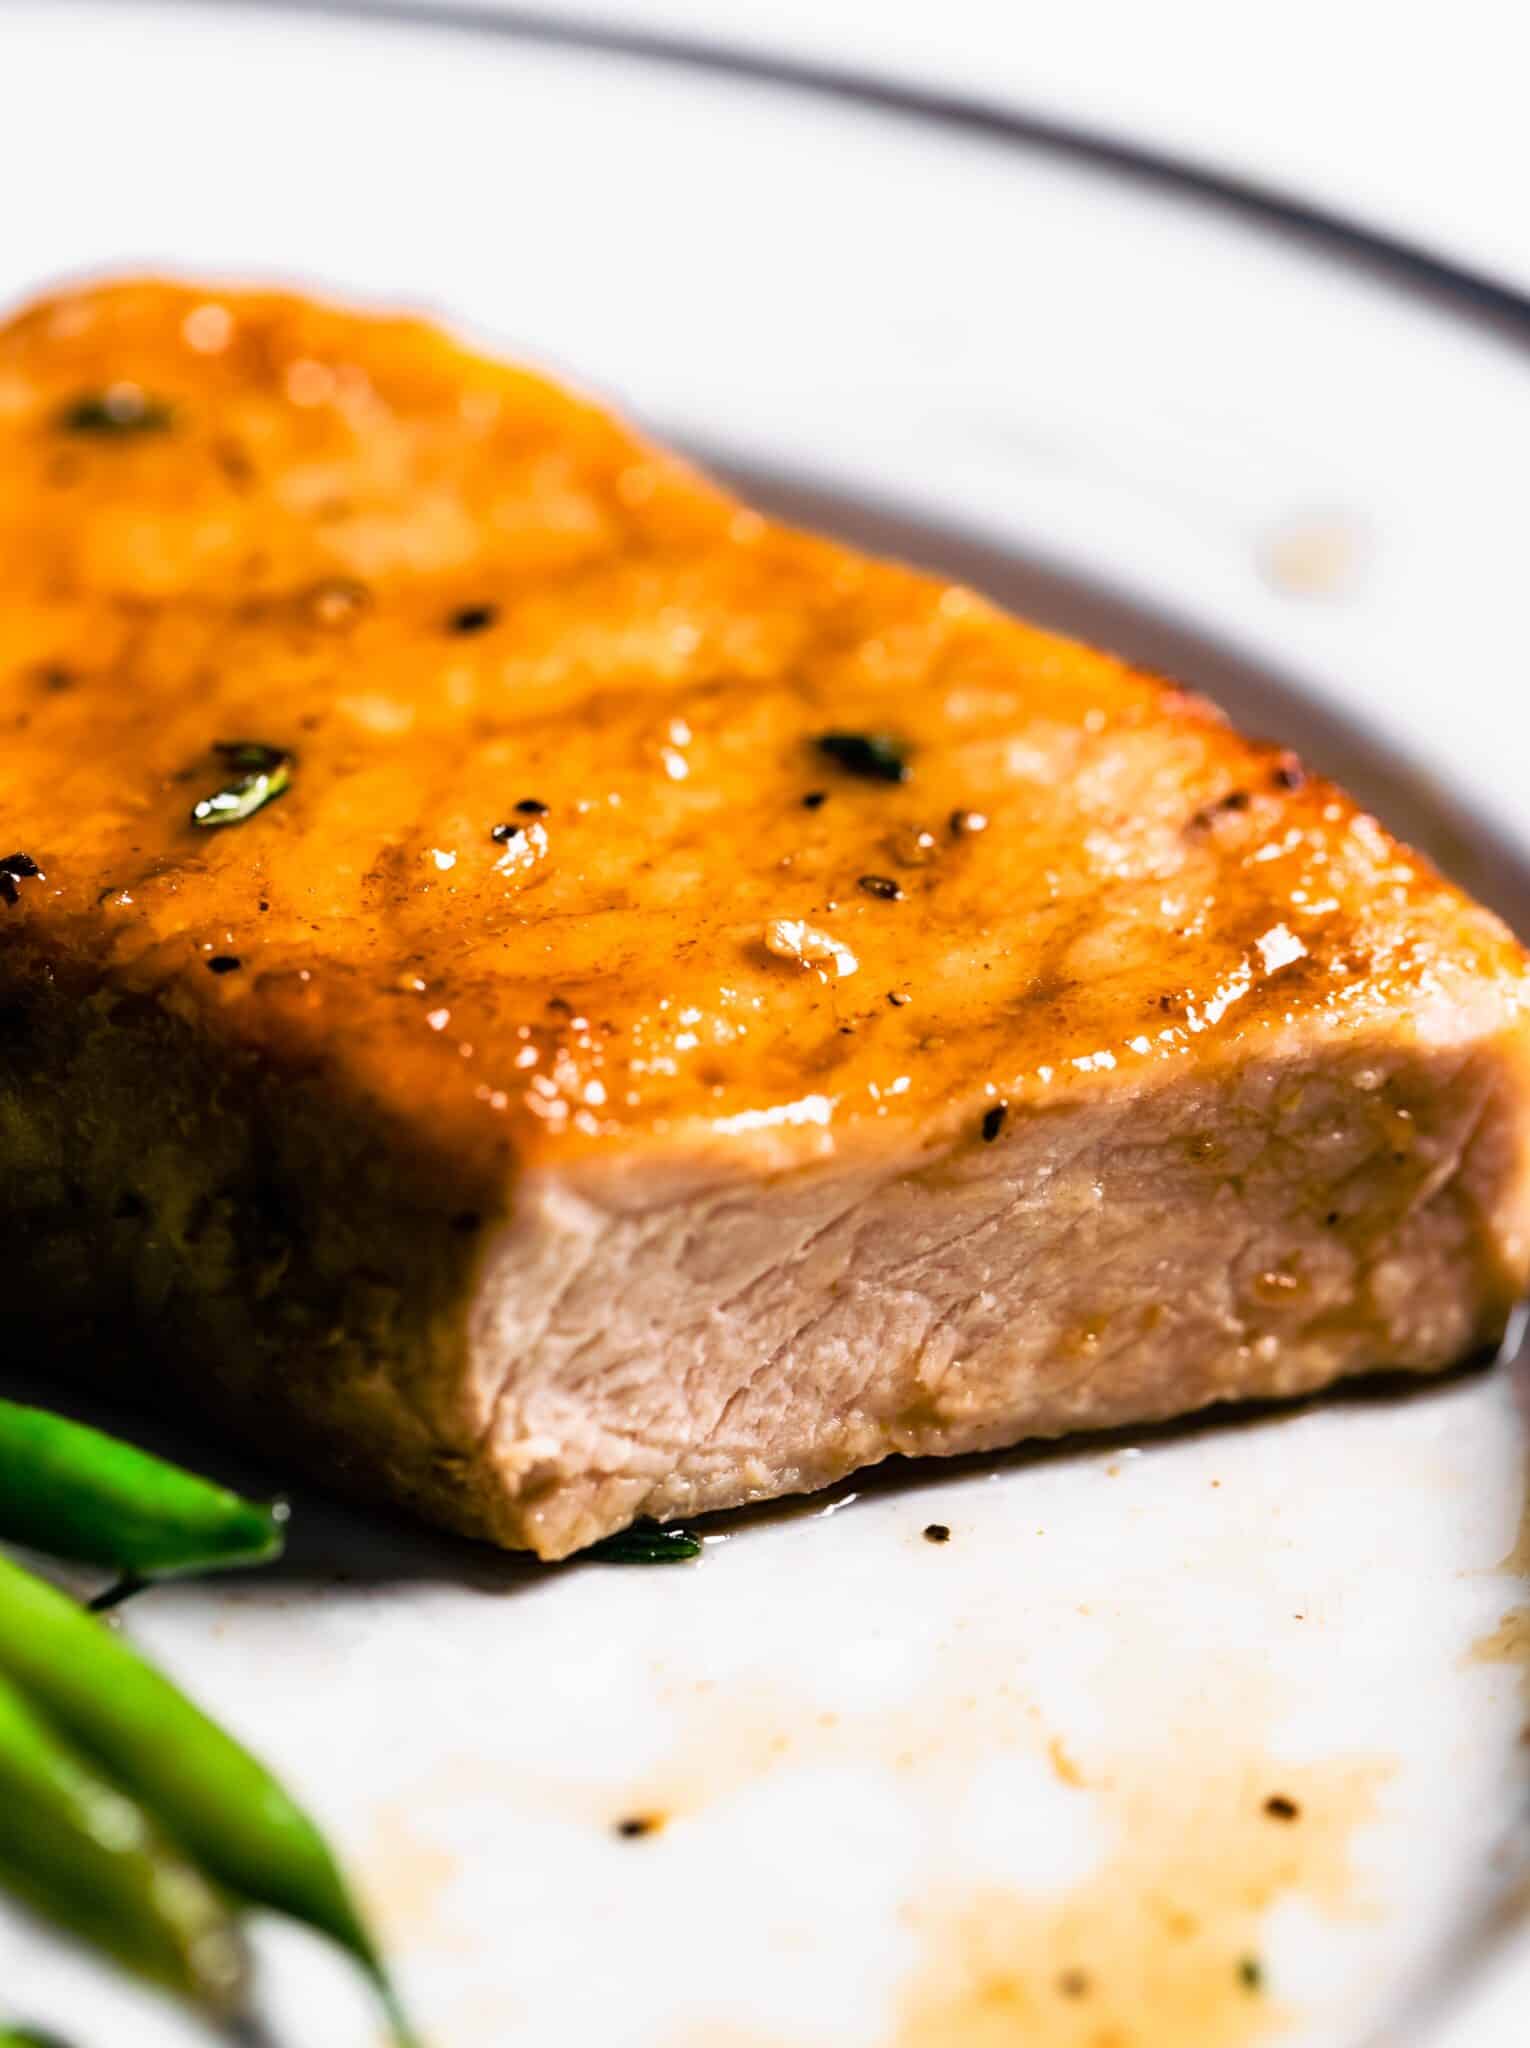 Up close photo of a boneless glazed pork chop on a white plate.